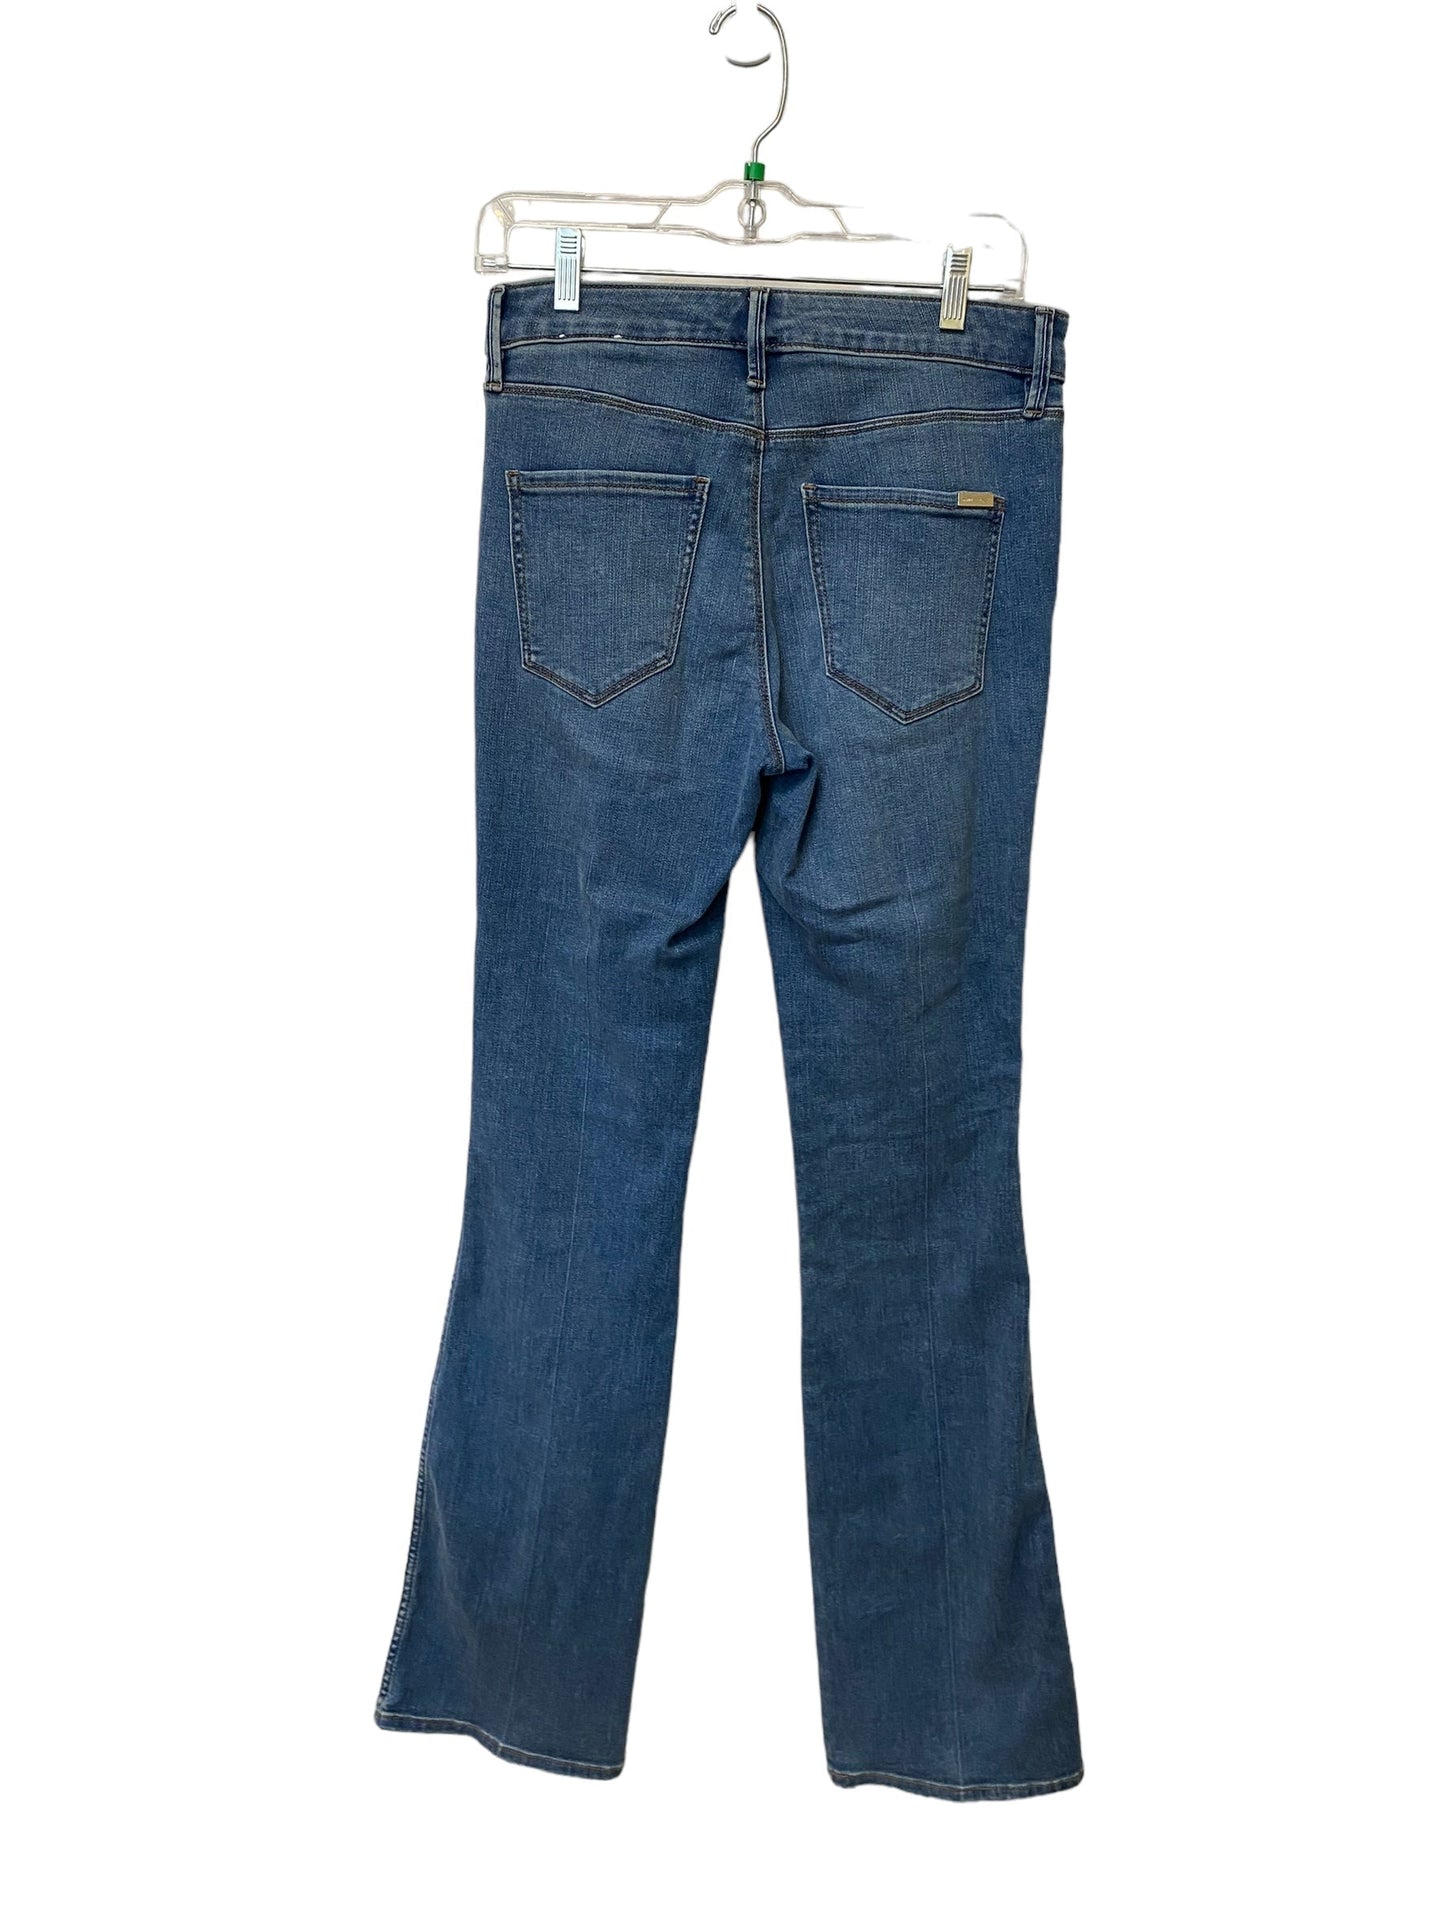 Blue Denim Jeans Skinny White House Black Market, Size 4